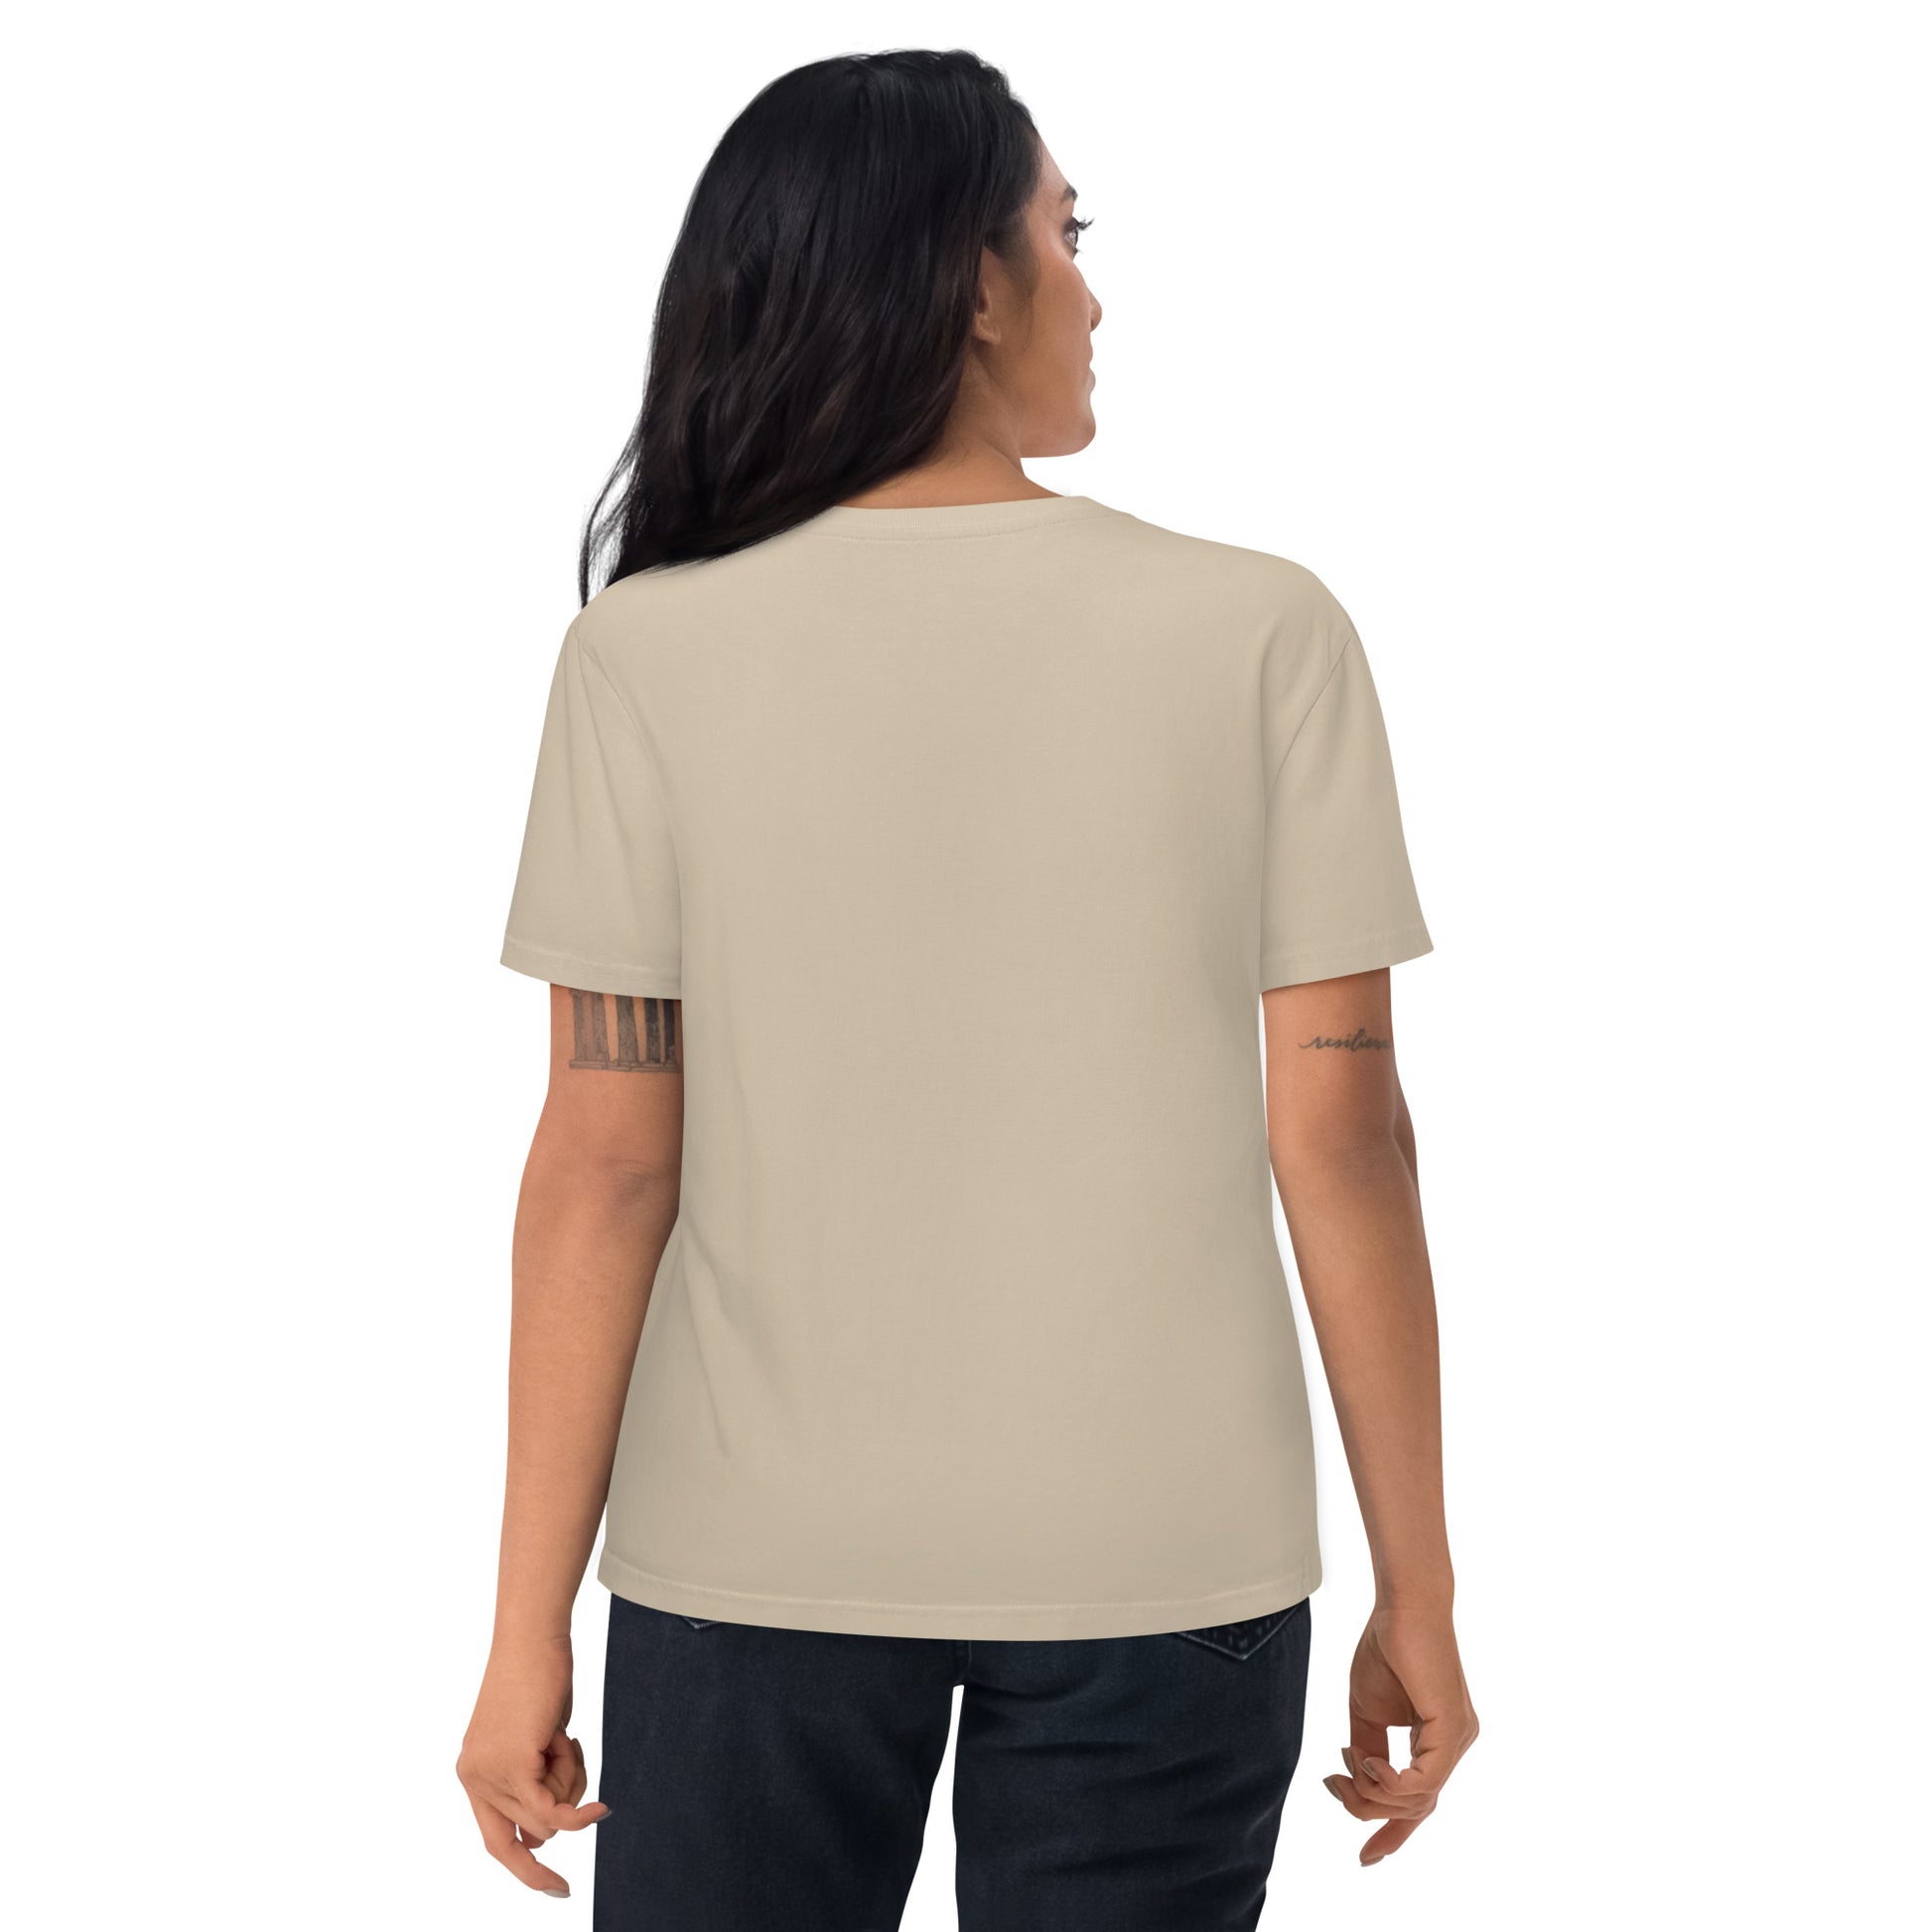 "BUG FREE" Unisex organic cotton light t-shirt (embroidered) The Developer Shop